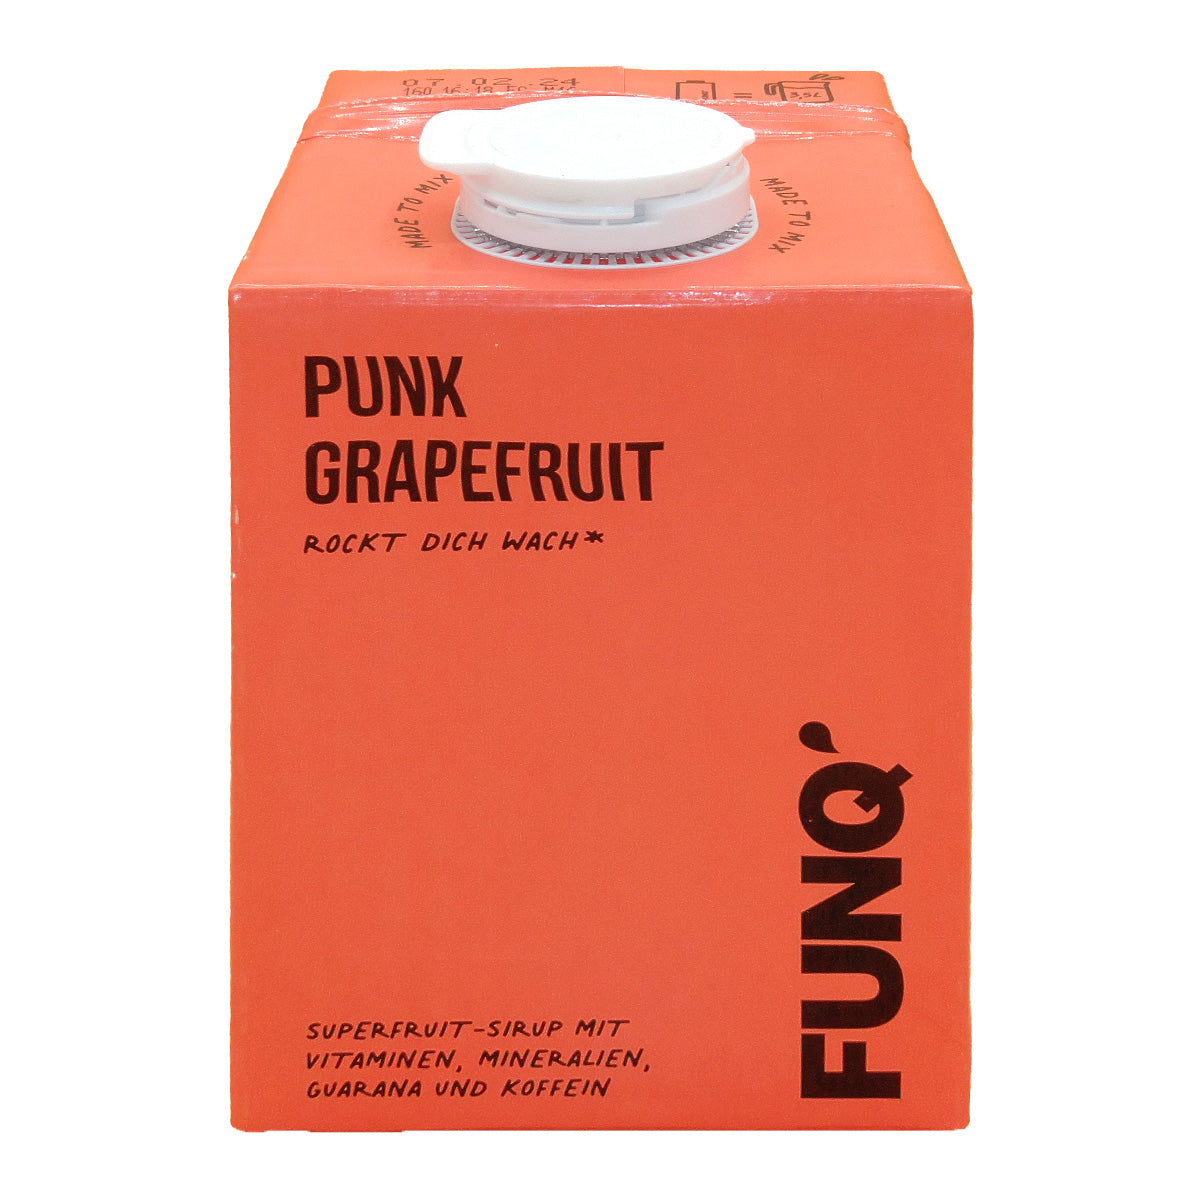 FUNQ Superfruit-Sirup Grapefruit, 500ml